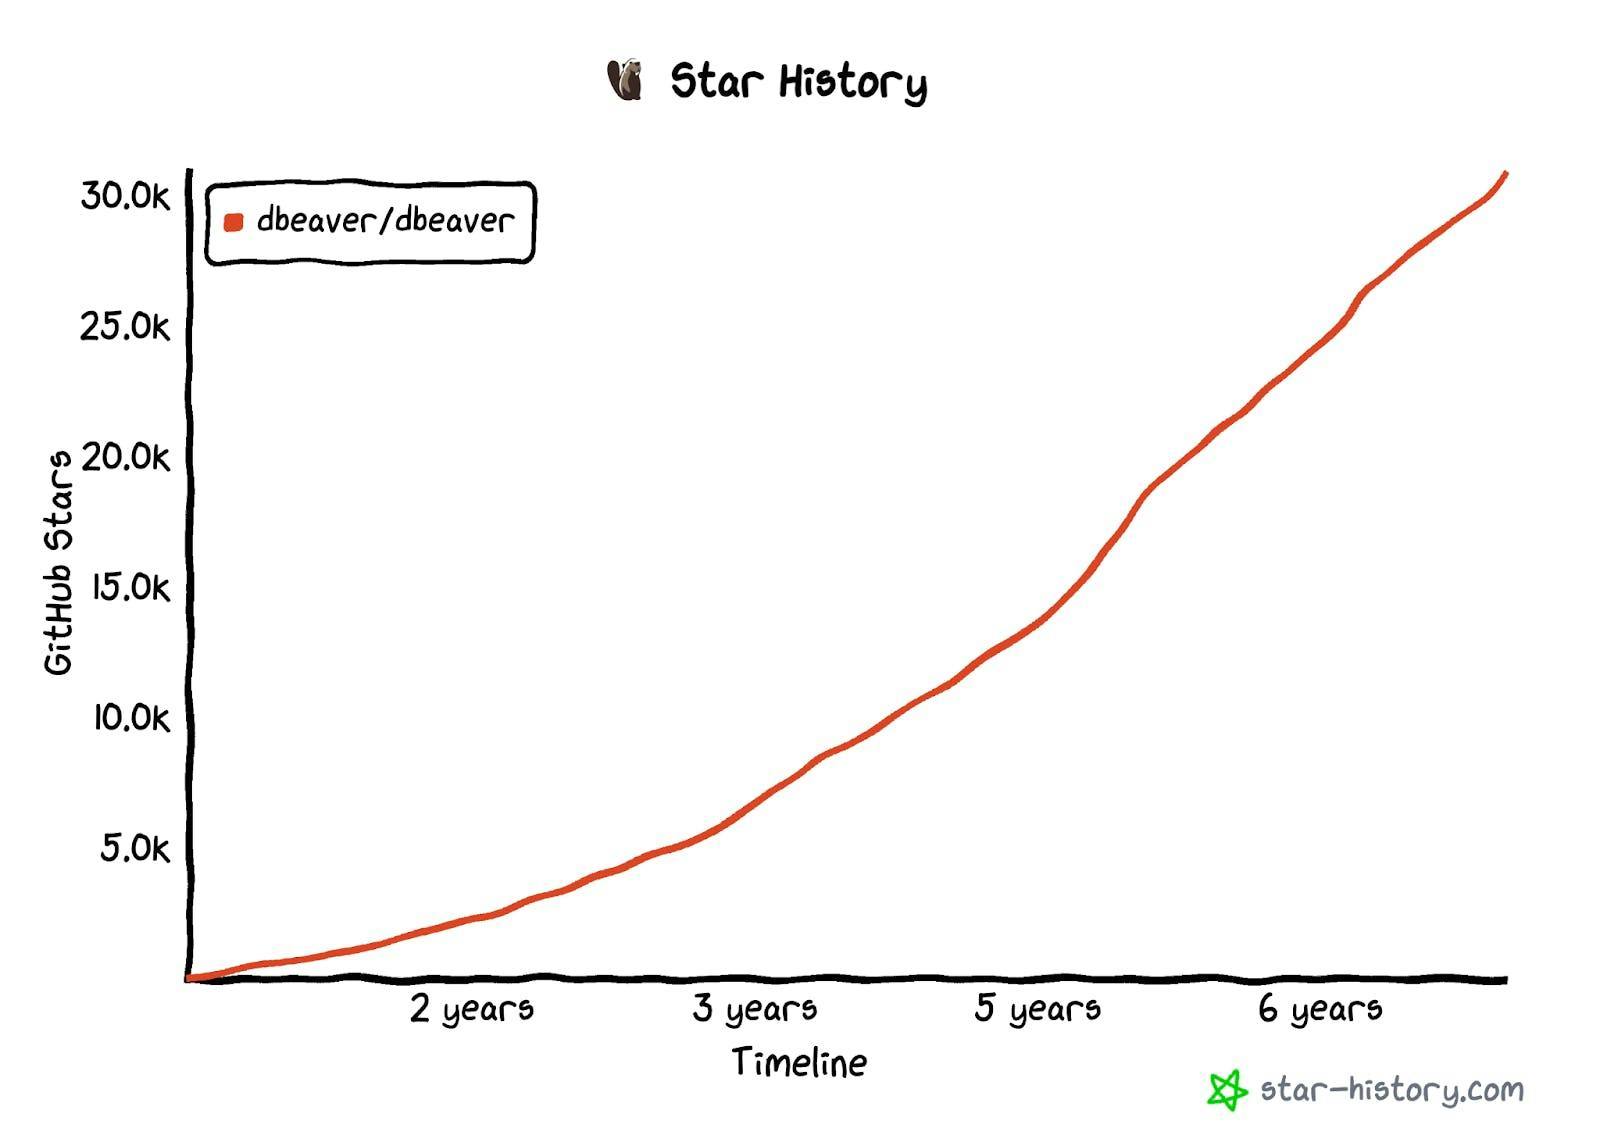 DBeaver's GitHub Star History